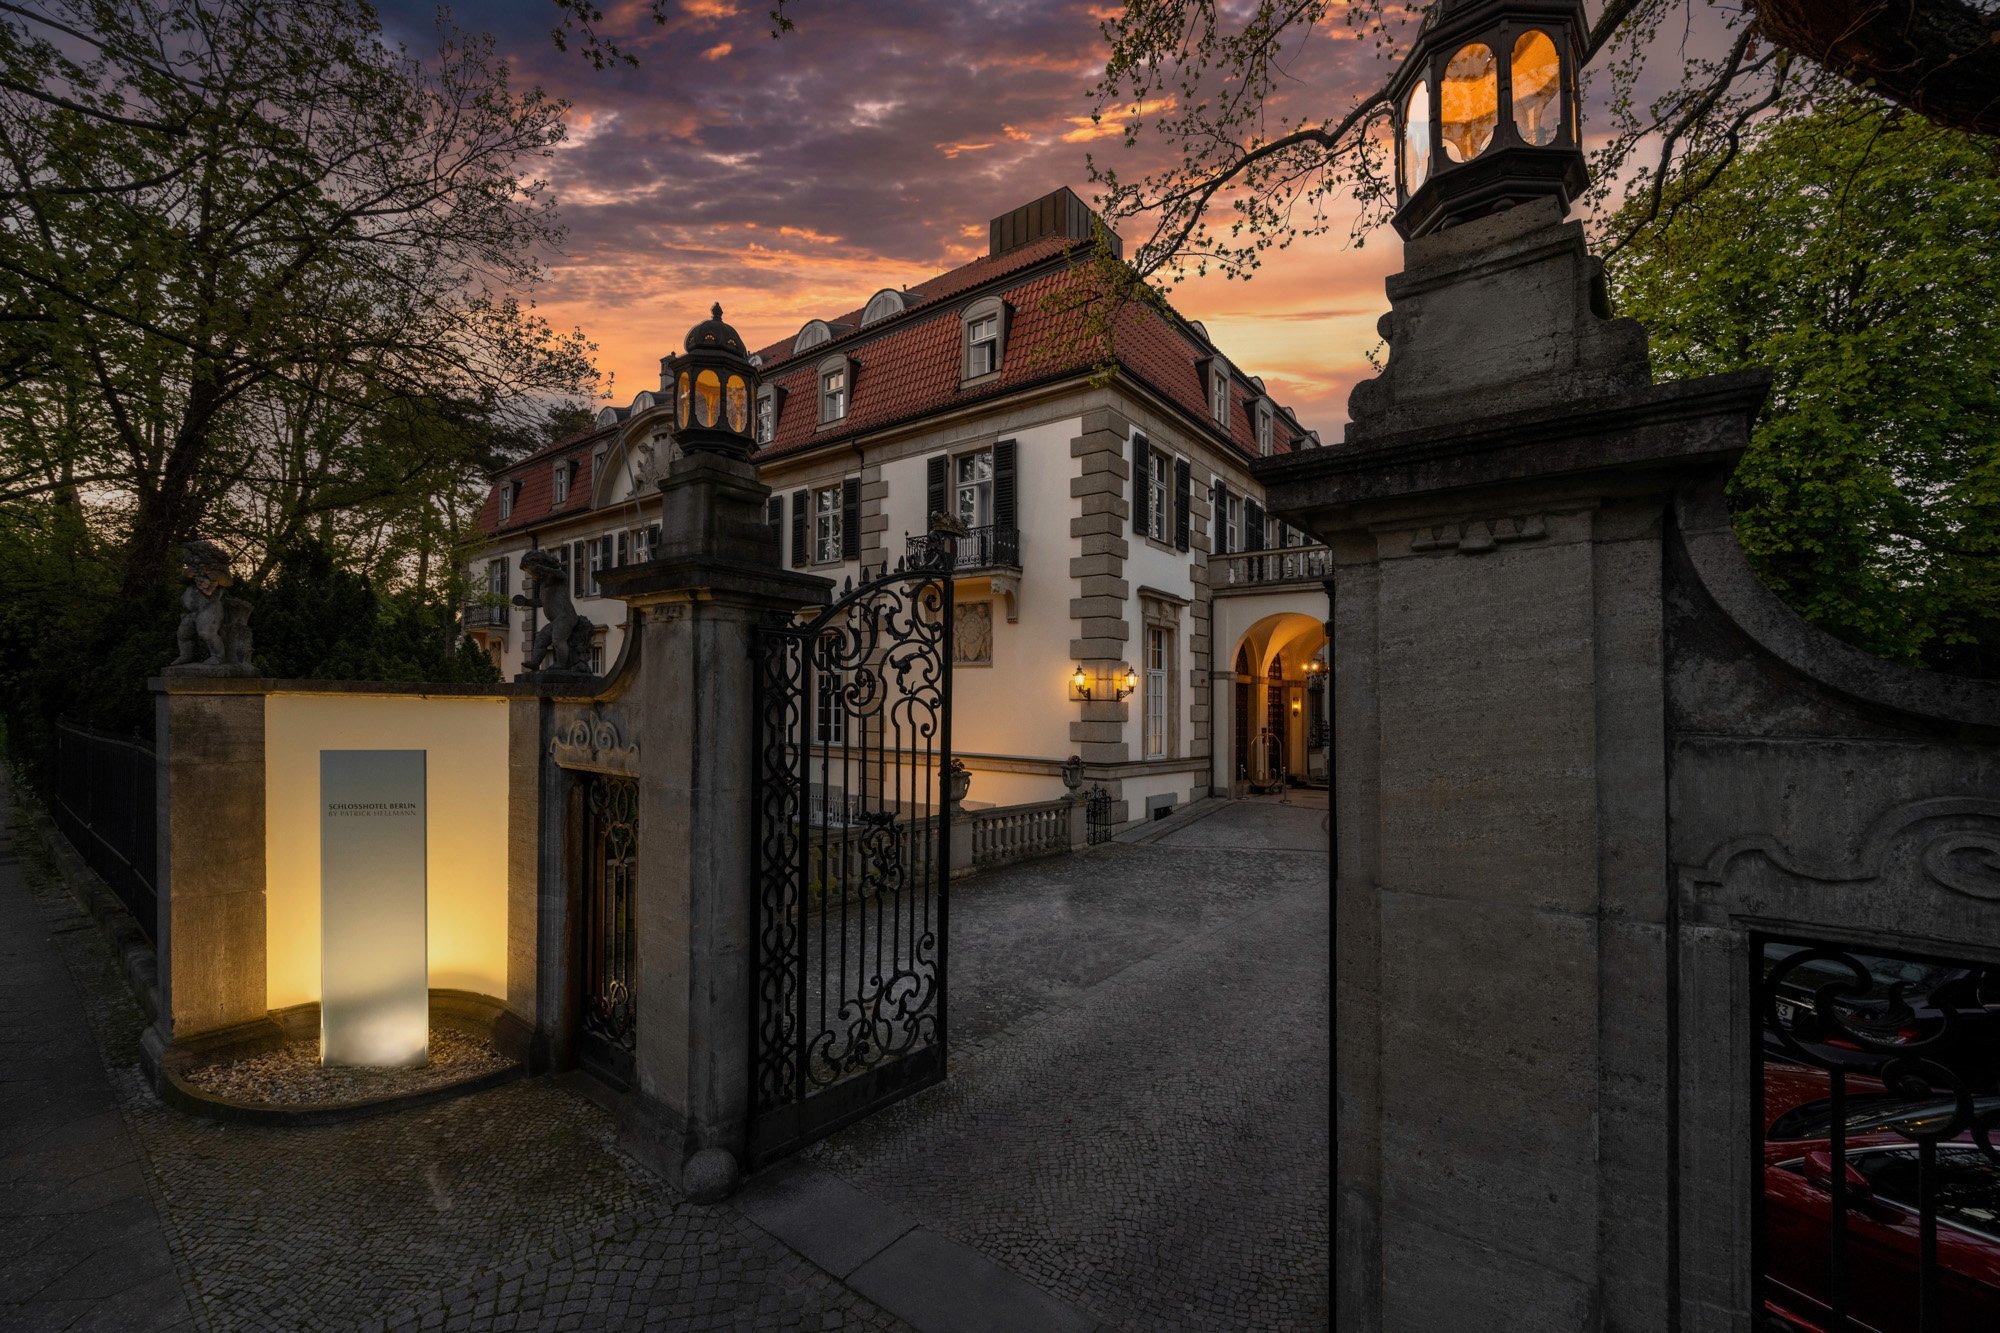 SchlossHotel Berlin by Patrick Helmann